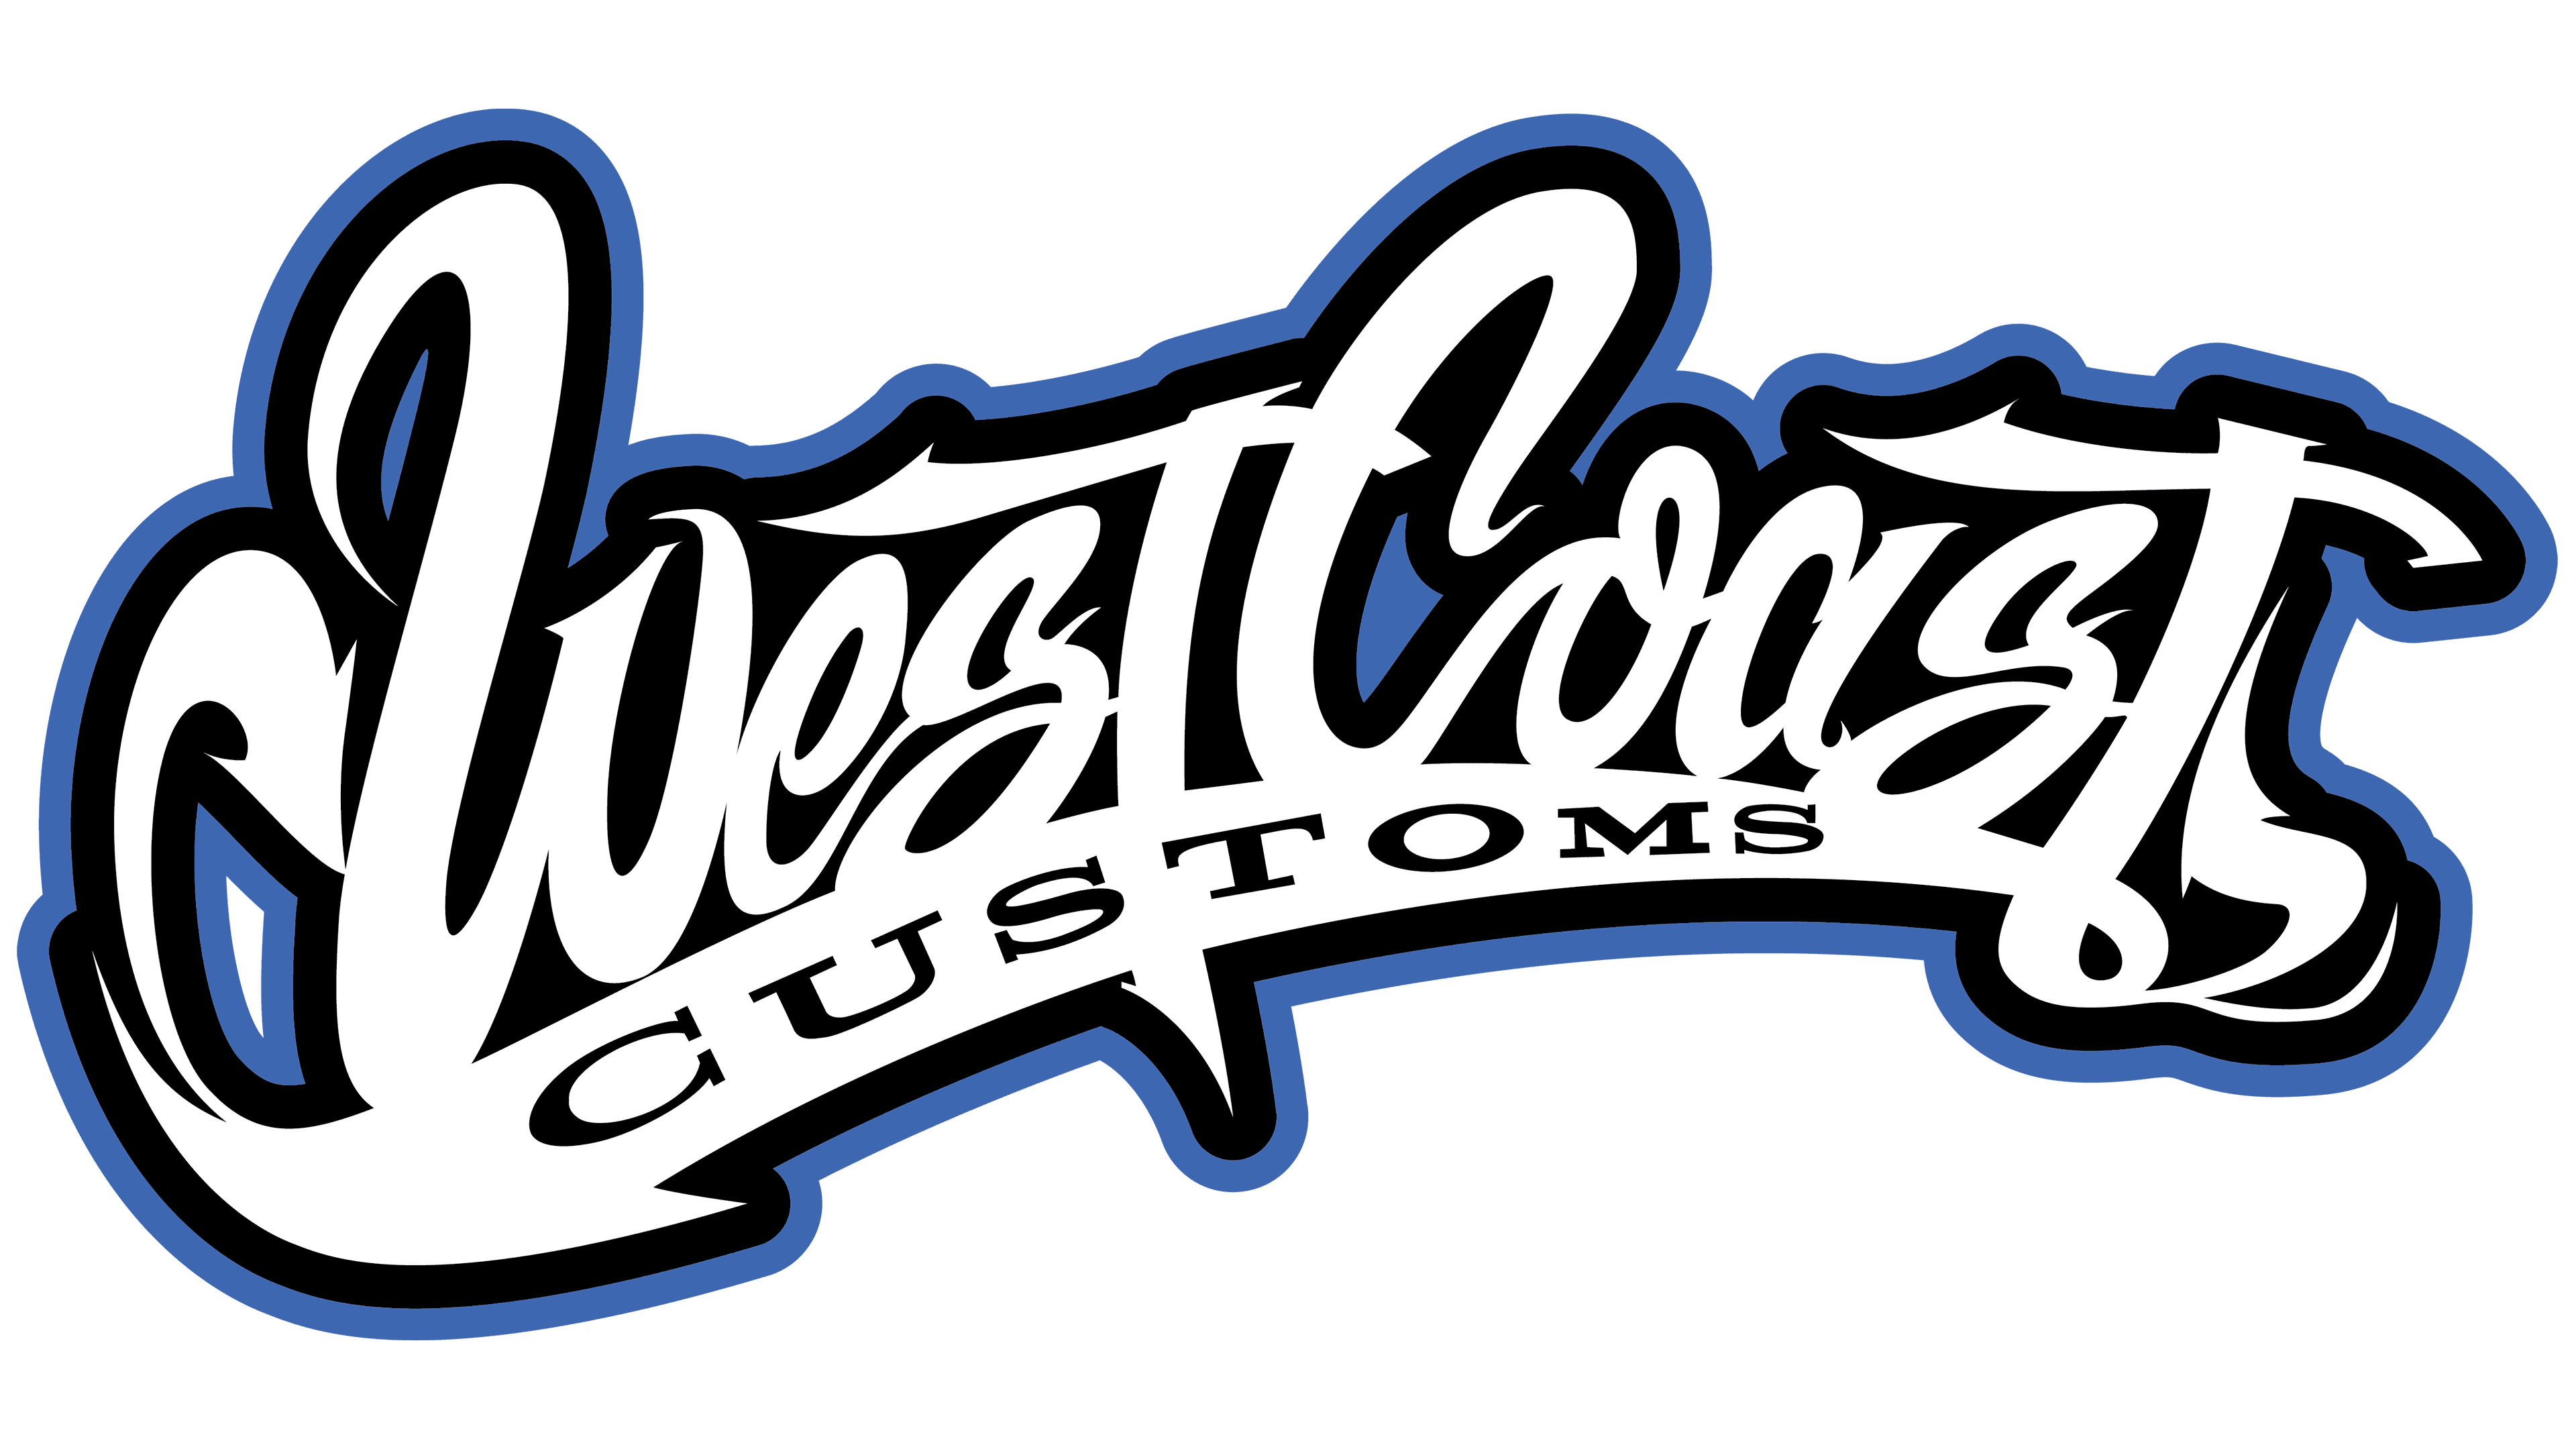 Western coast. Вест Кост кастомс. Los Santos Customs логотип. Мастерская West Coast Customs. West Coast надпись.